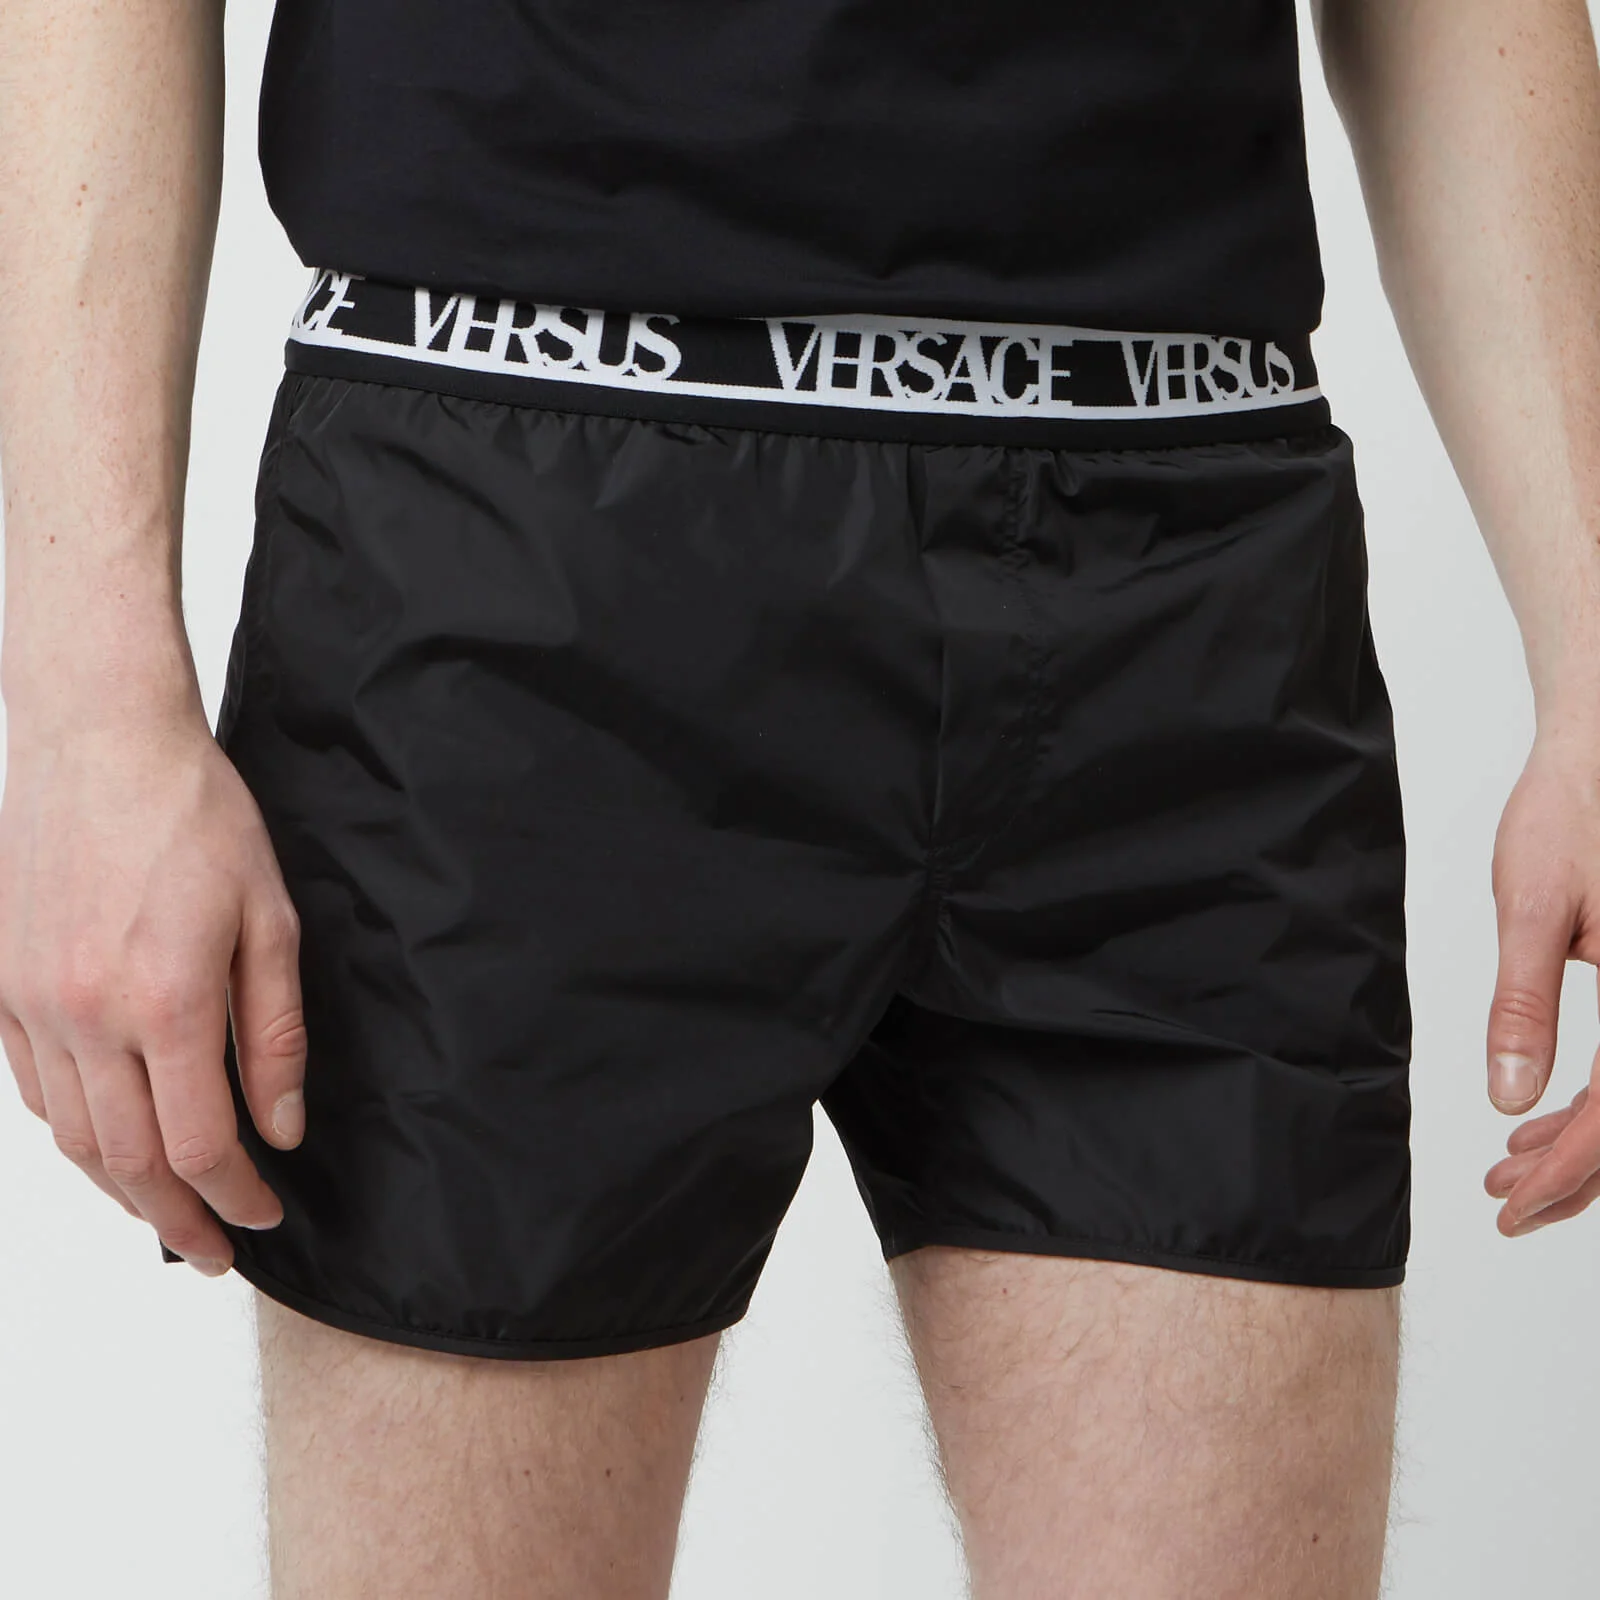 Versus Versace Men's Waist Logo Swim Shorts - Black Image 1